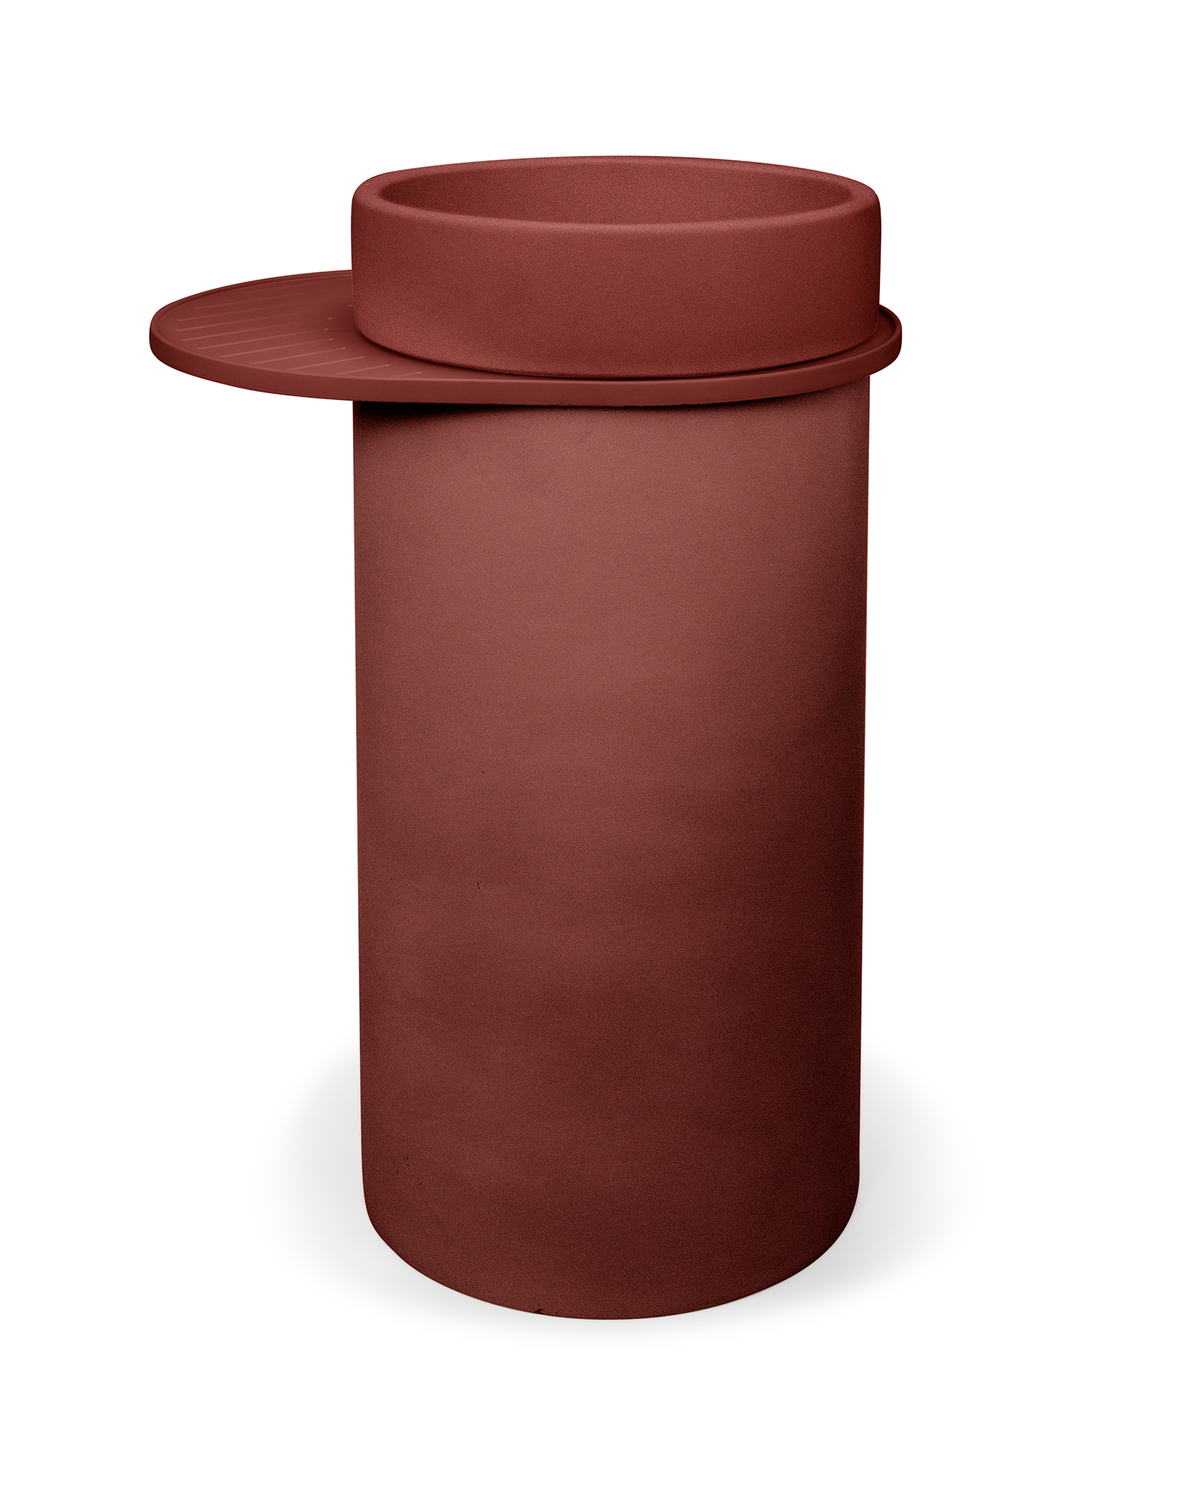 Cylinder - Bowl Basin (Clay)